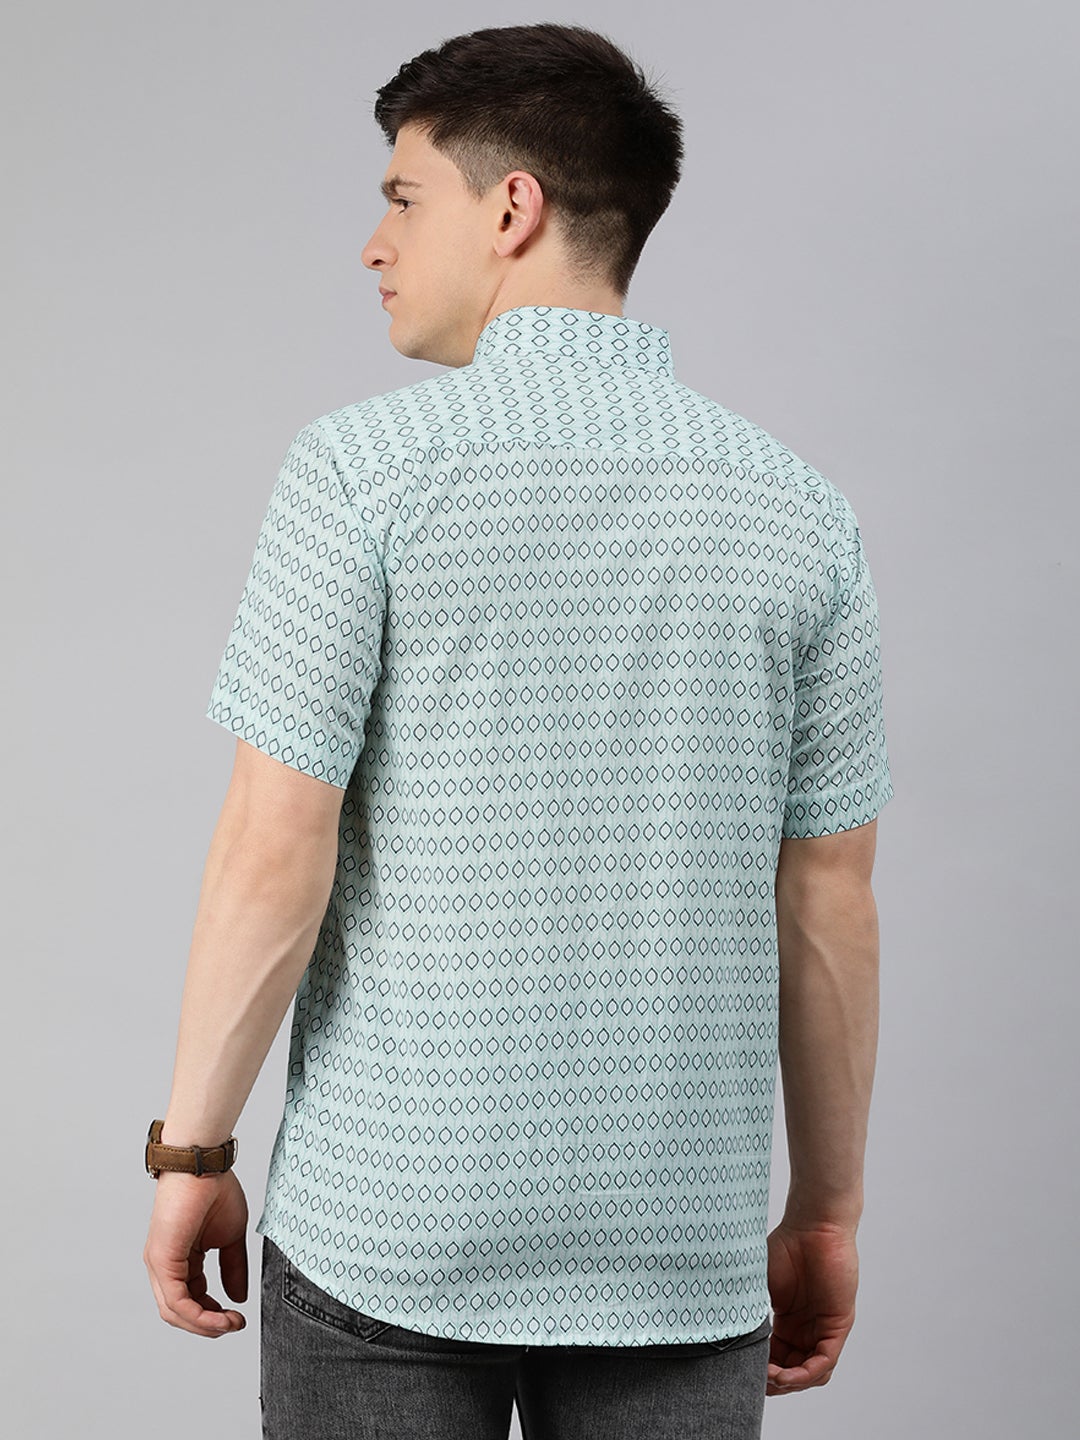 Sea Green Cotton Short Sleeves Shirts For Men-MMH046 - NOZ2TOZ